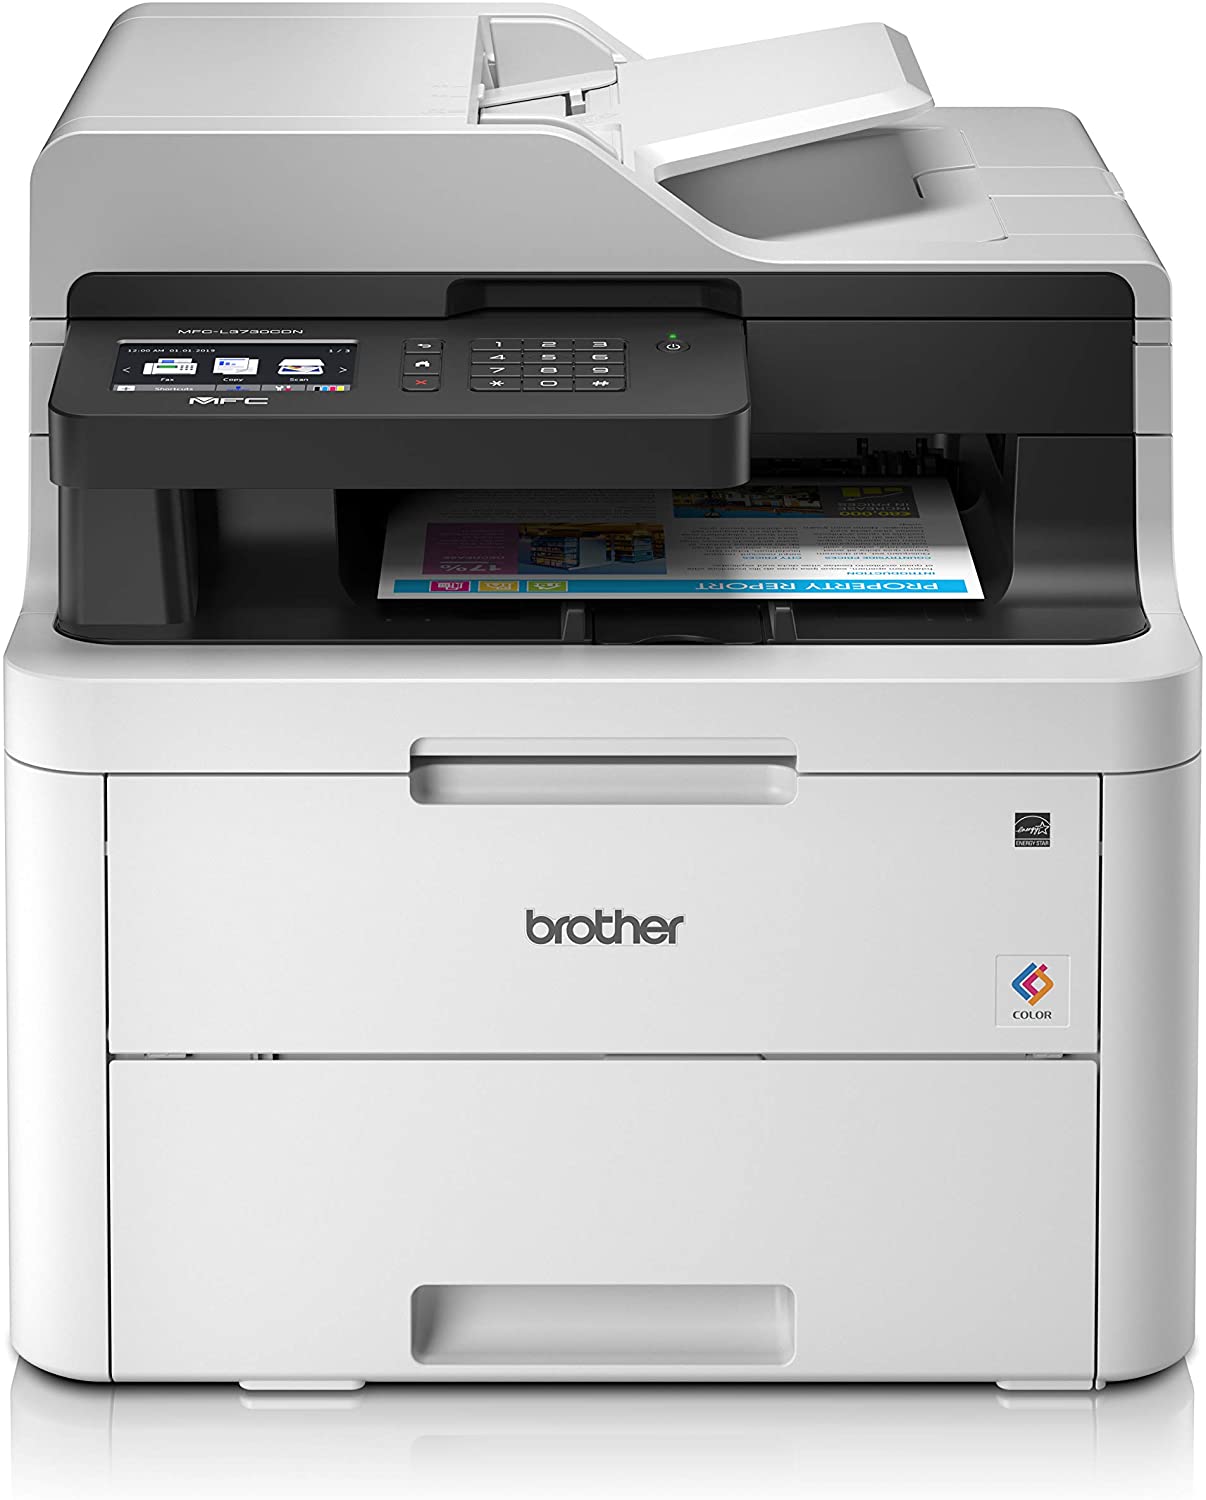 Brother MFC-L3730CDN best colour laser printer reviews uk